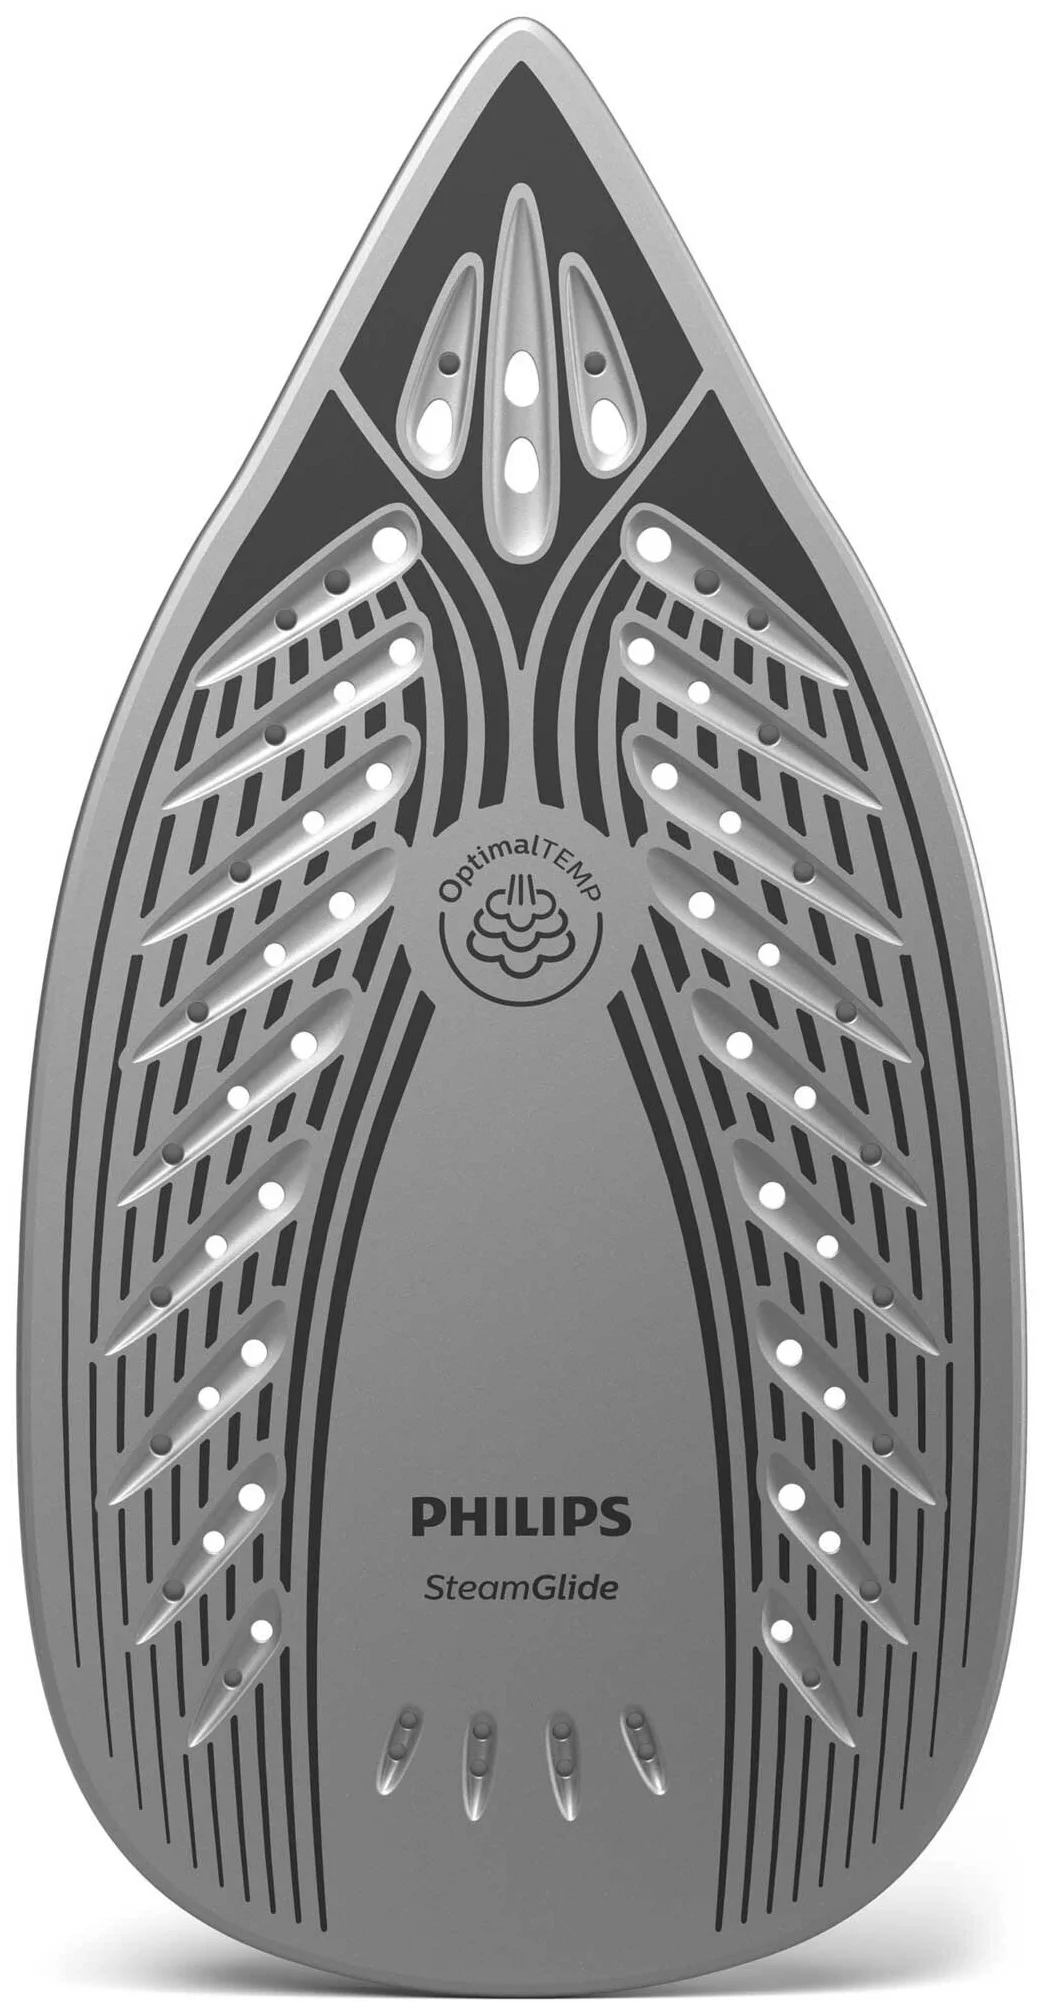 Philips GC7926/20 PerfectCare Compact Plus - вертикальное отпаривание